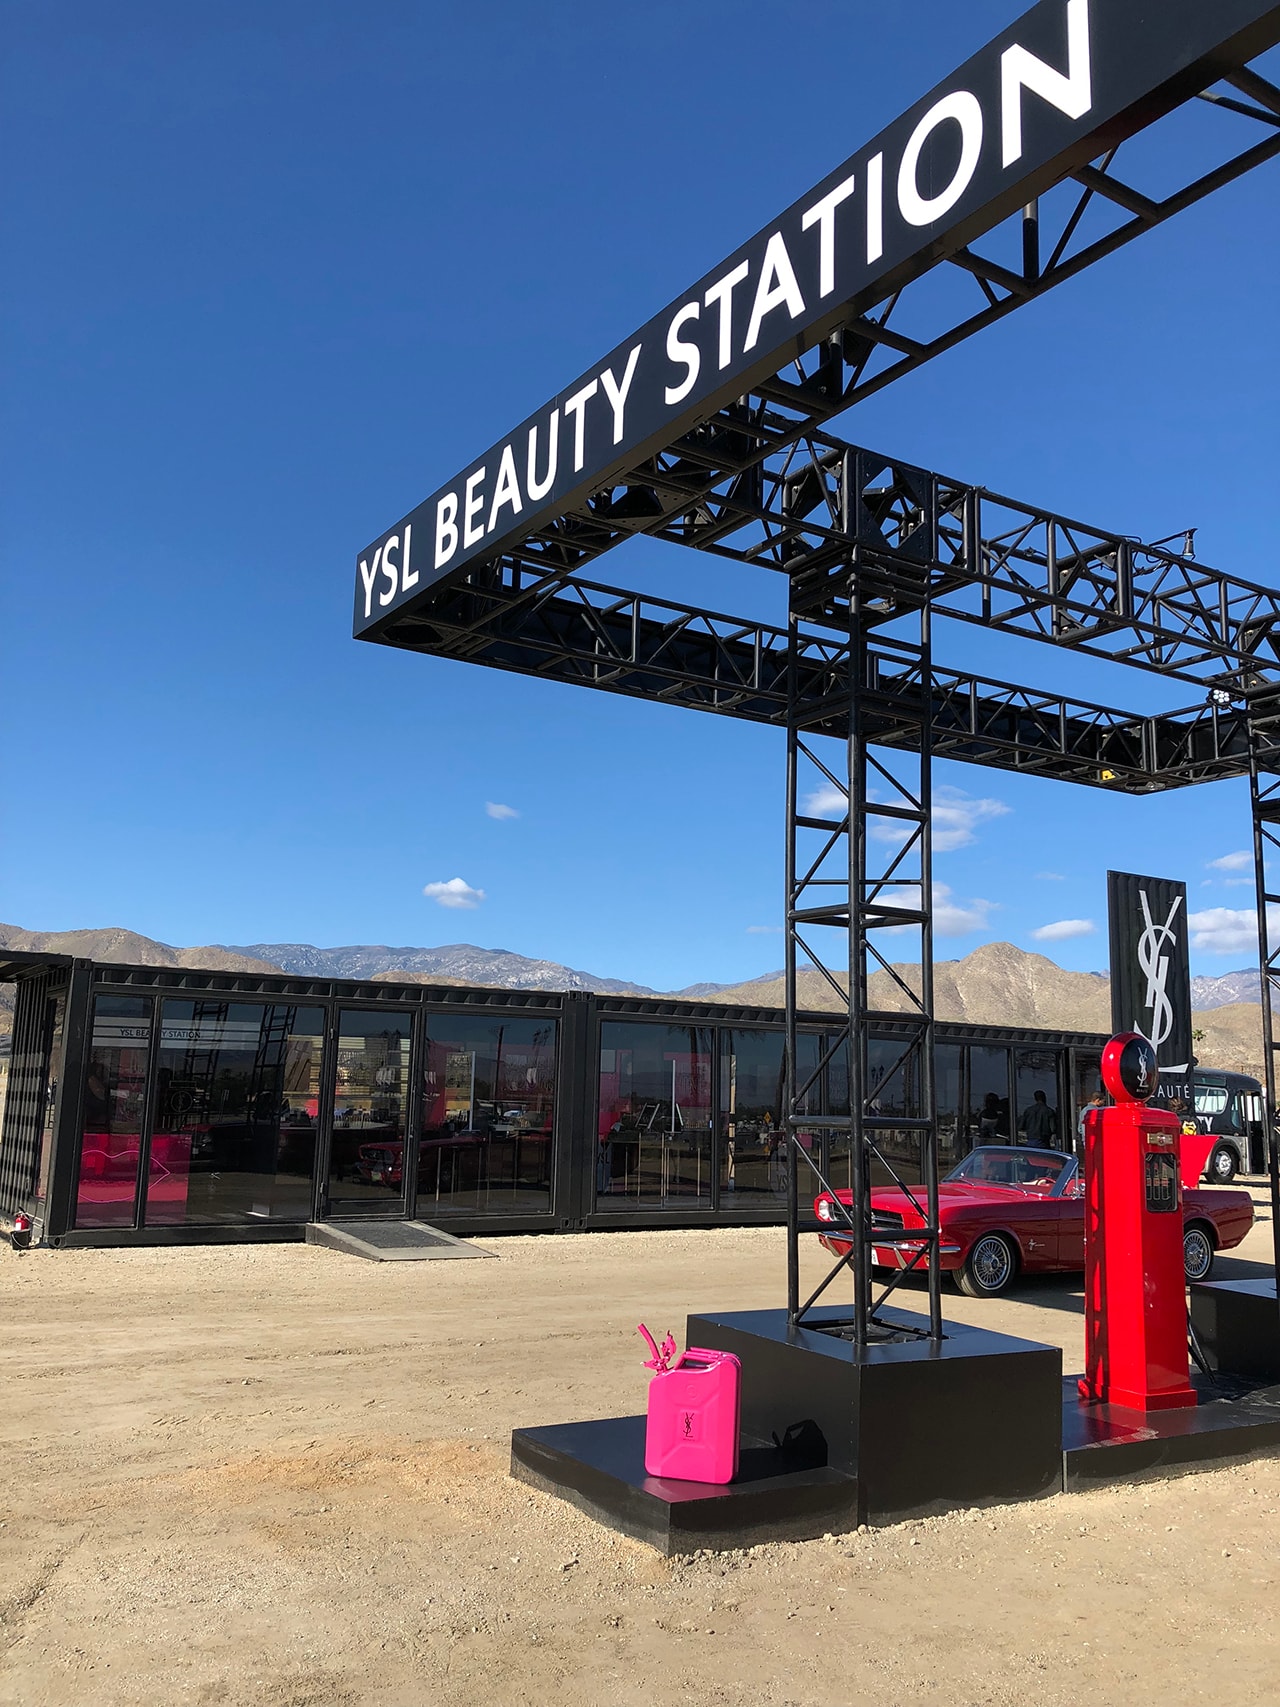 YSL Beauty Coachella Arts Music Festival 2019 Gas Station Pop-Up Shop Store Makeup Cosmetics